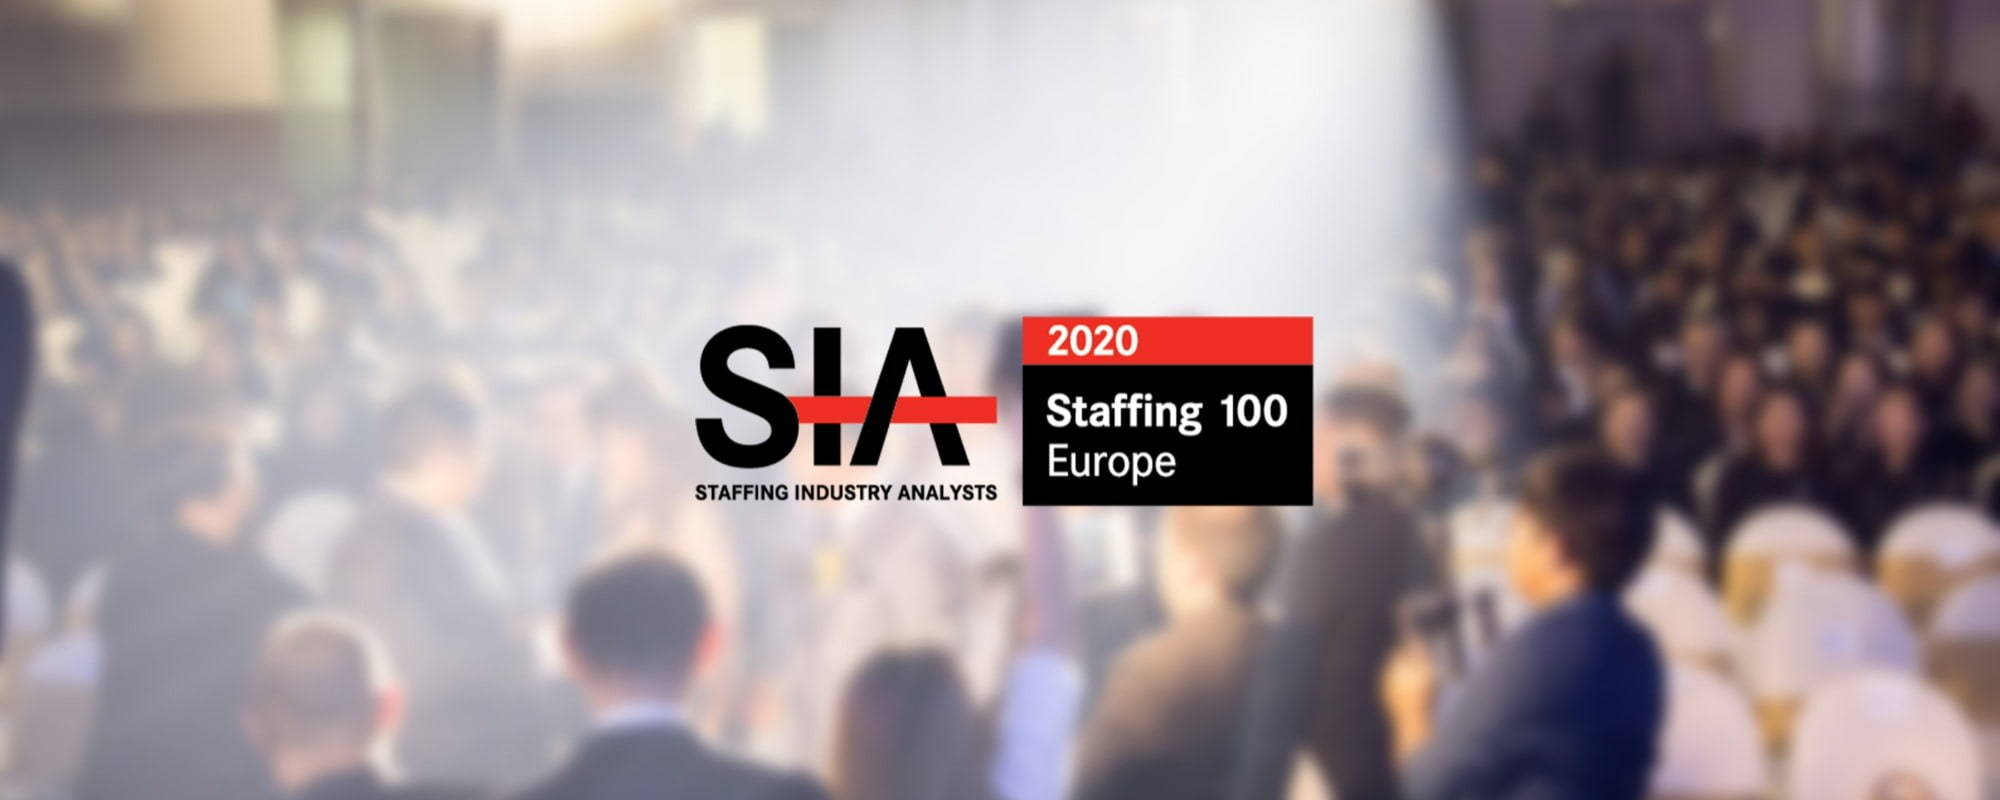 SIA Staffing 100 Europe